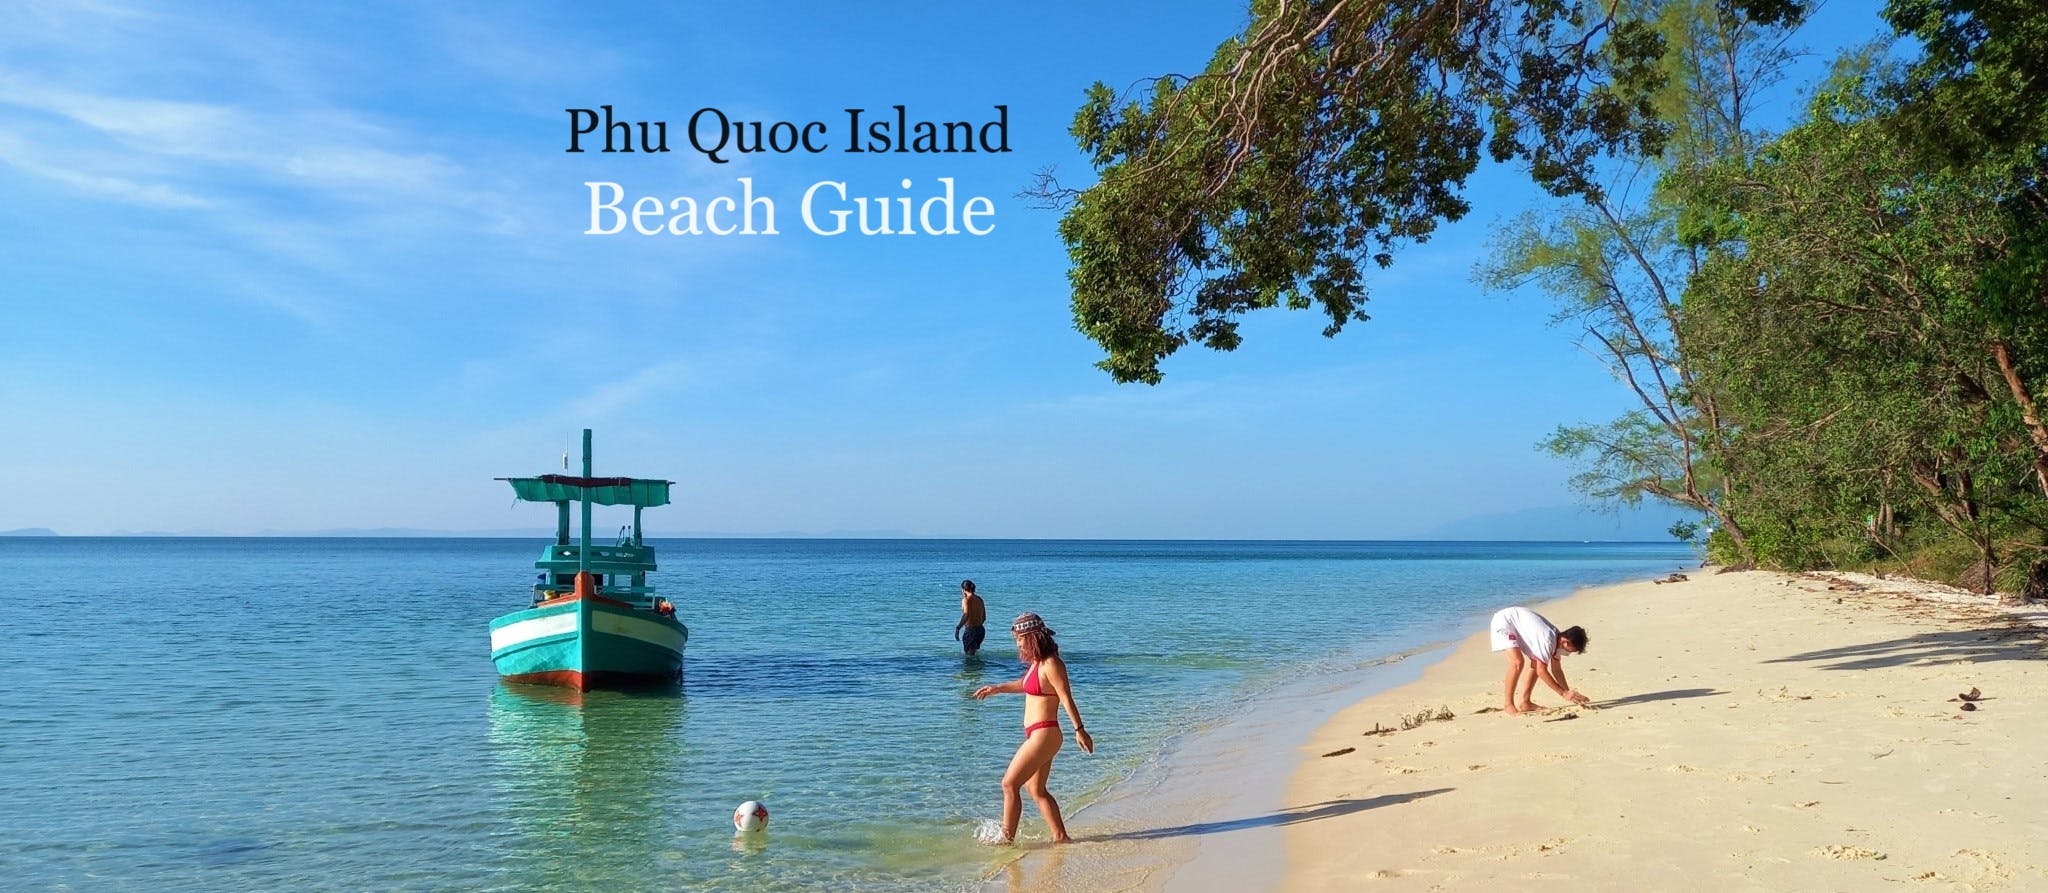 Phu Quoc Island Beach Guide, Vietnam